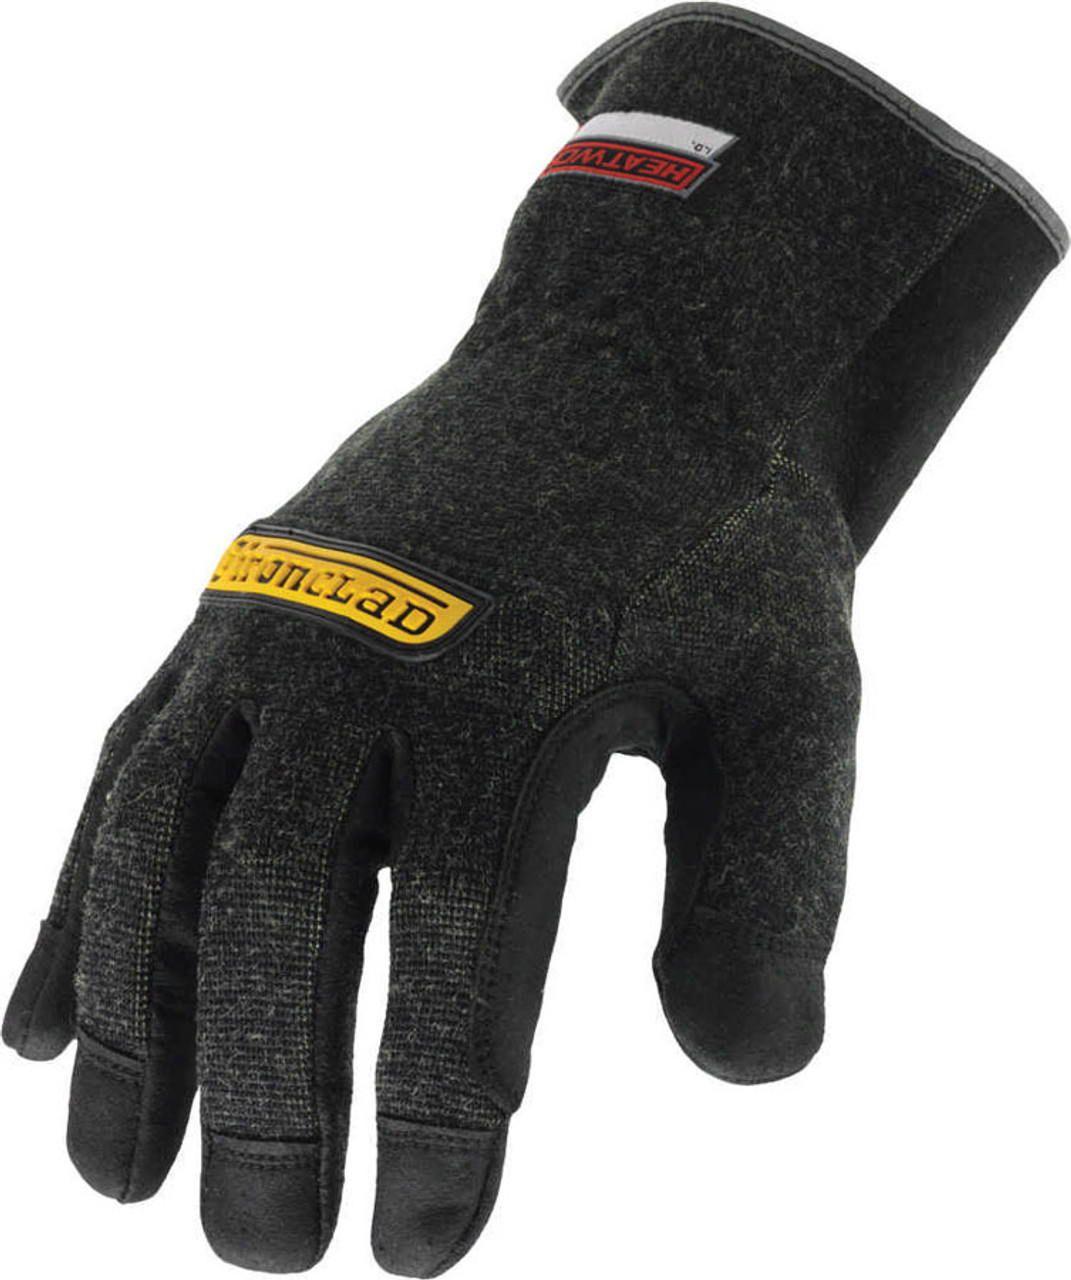 Heatworx Glove X-Large Reinforced